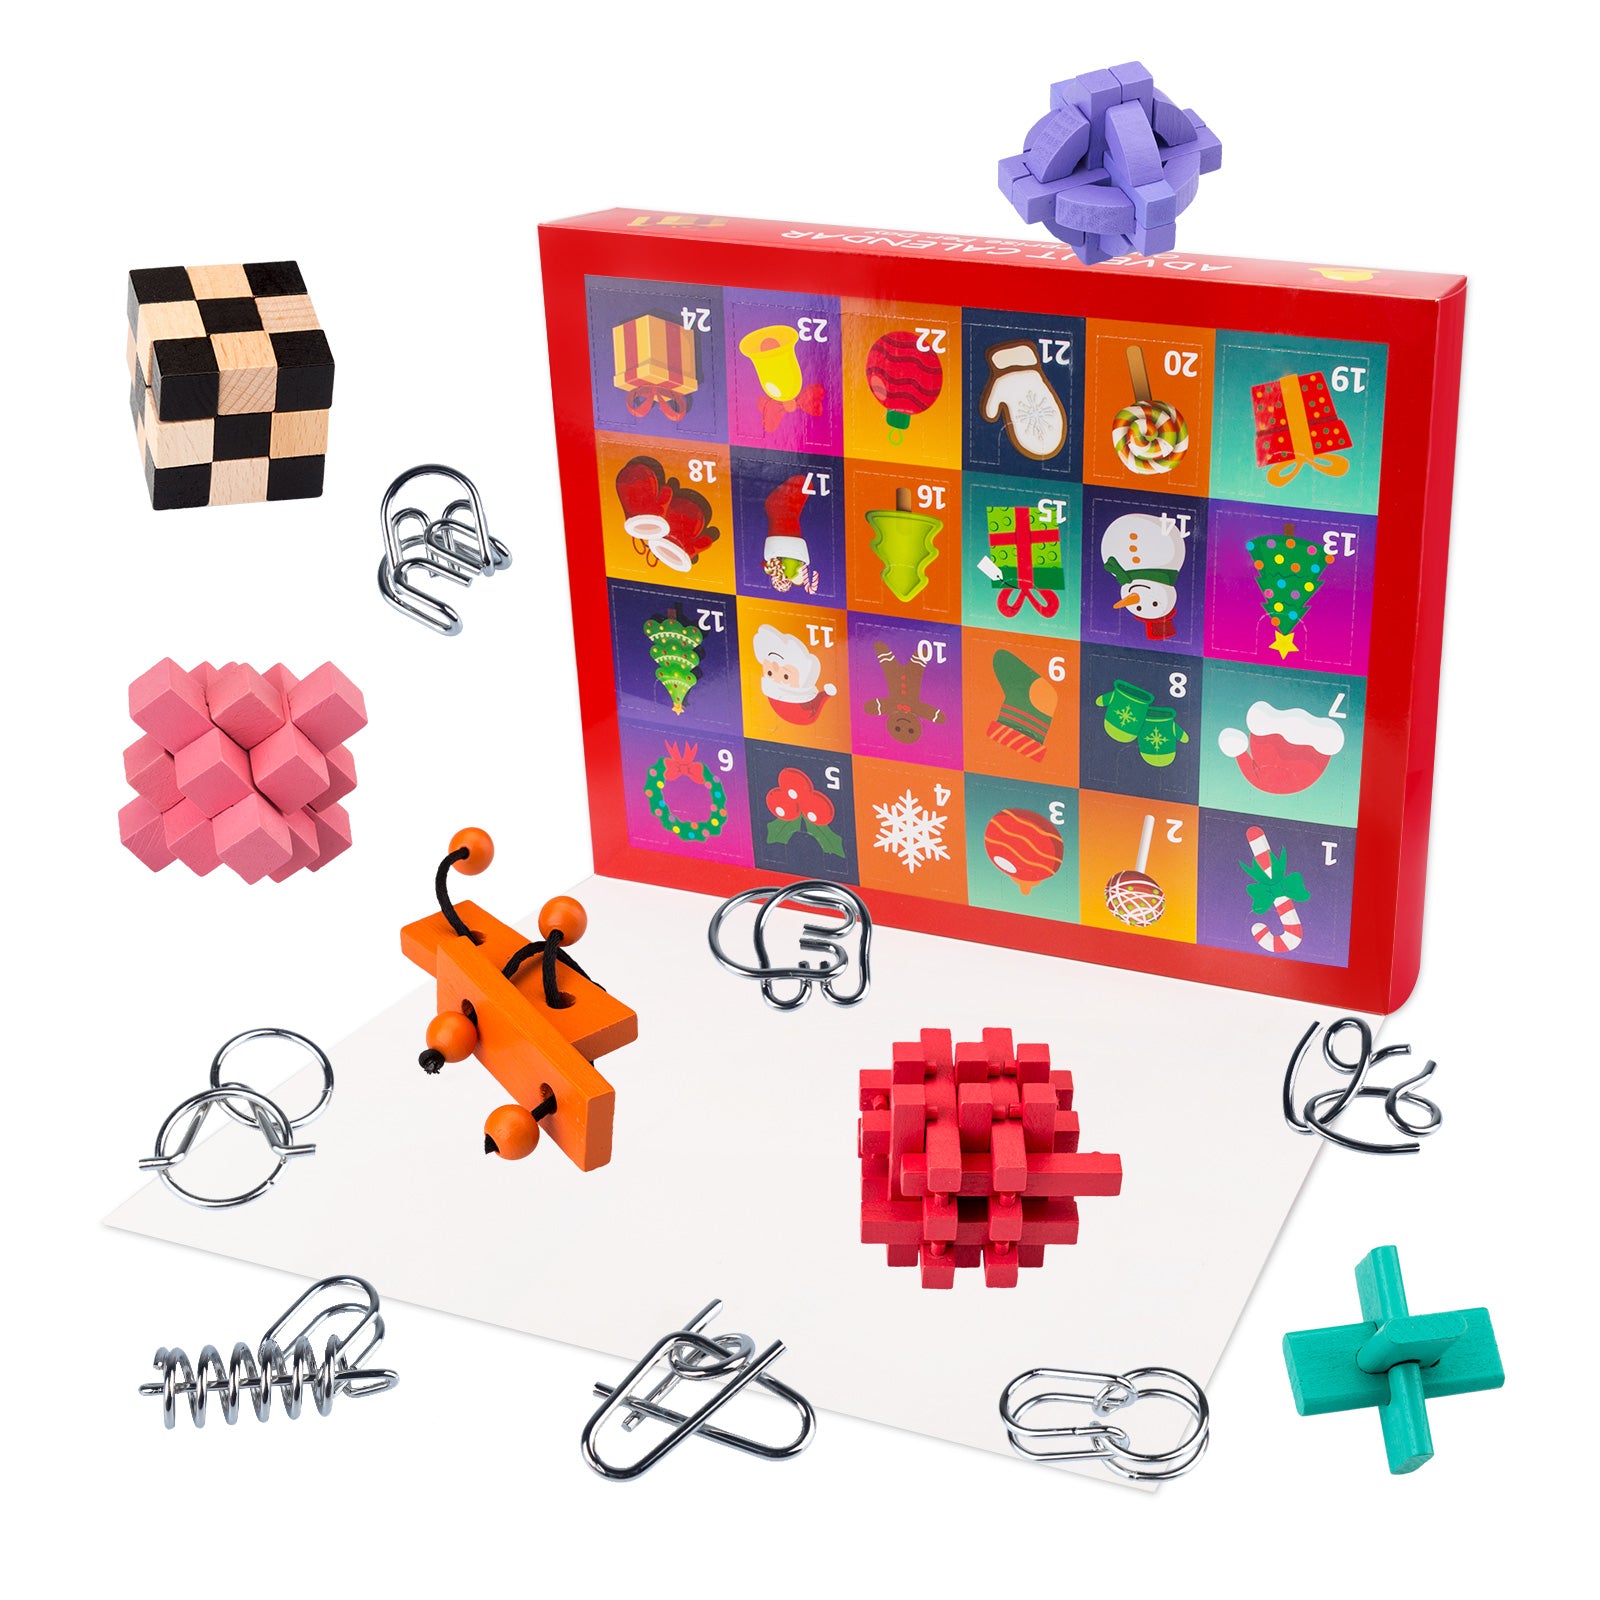 24 Christmas Advent Calendar Wooden Luban Lock Brainteaser Puzzle Toy